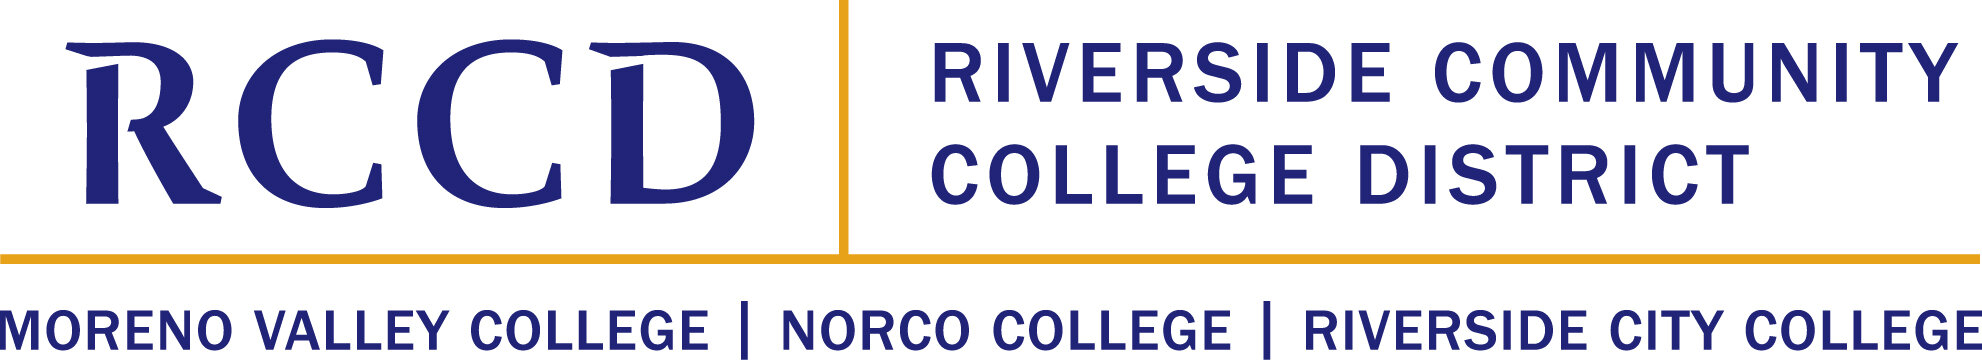 RCCD HOR RGB College Names.jpg